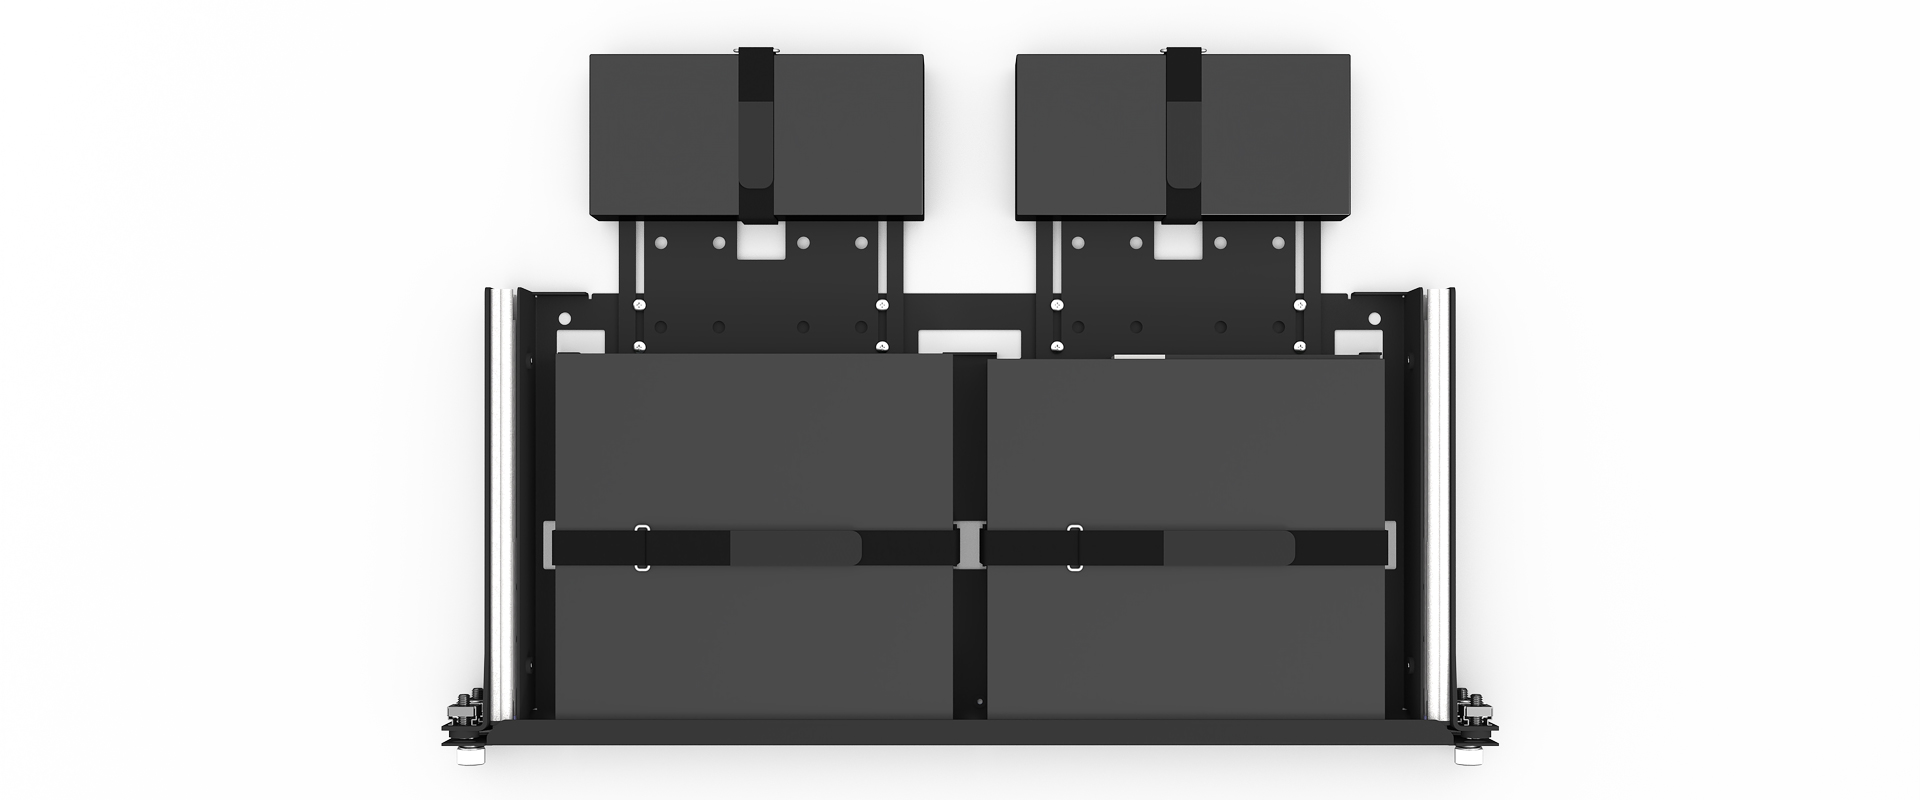 2x Dell Optiplex Micro Series rack mount - UM-DEL-202